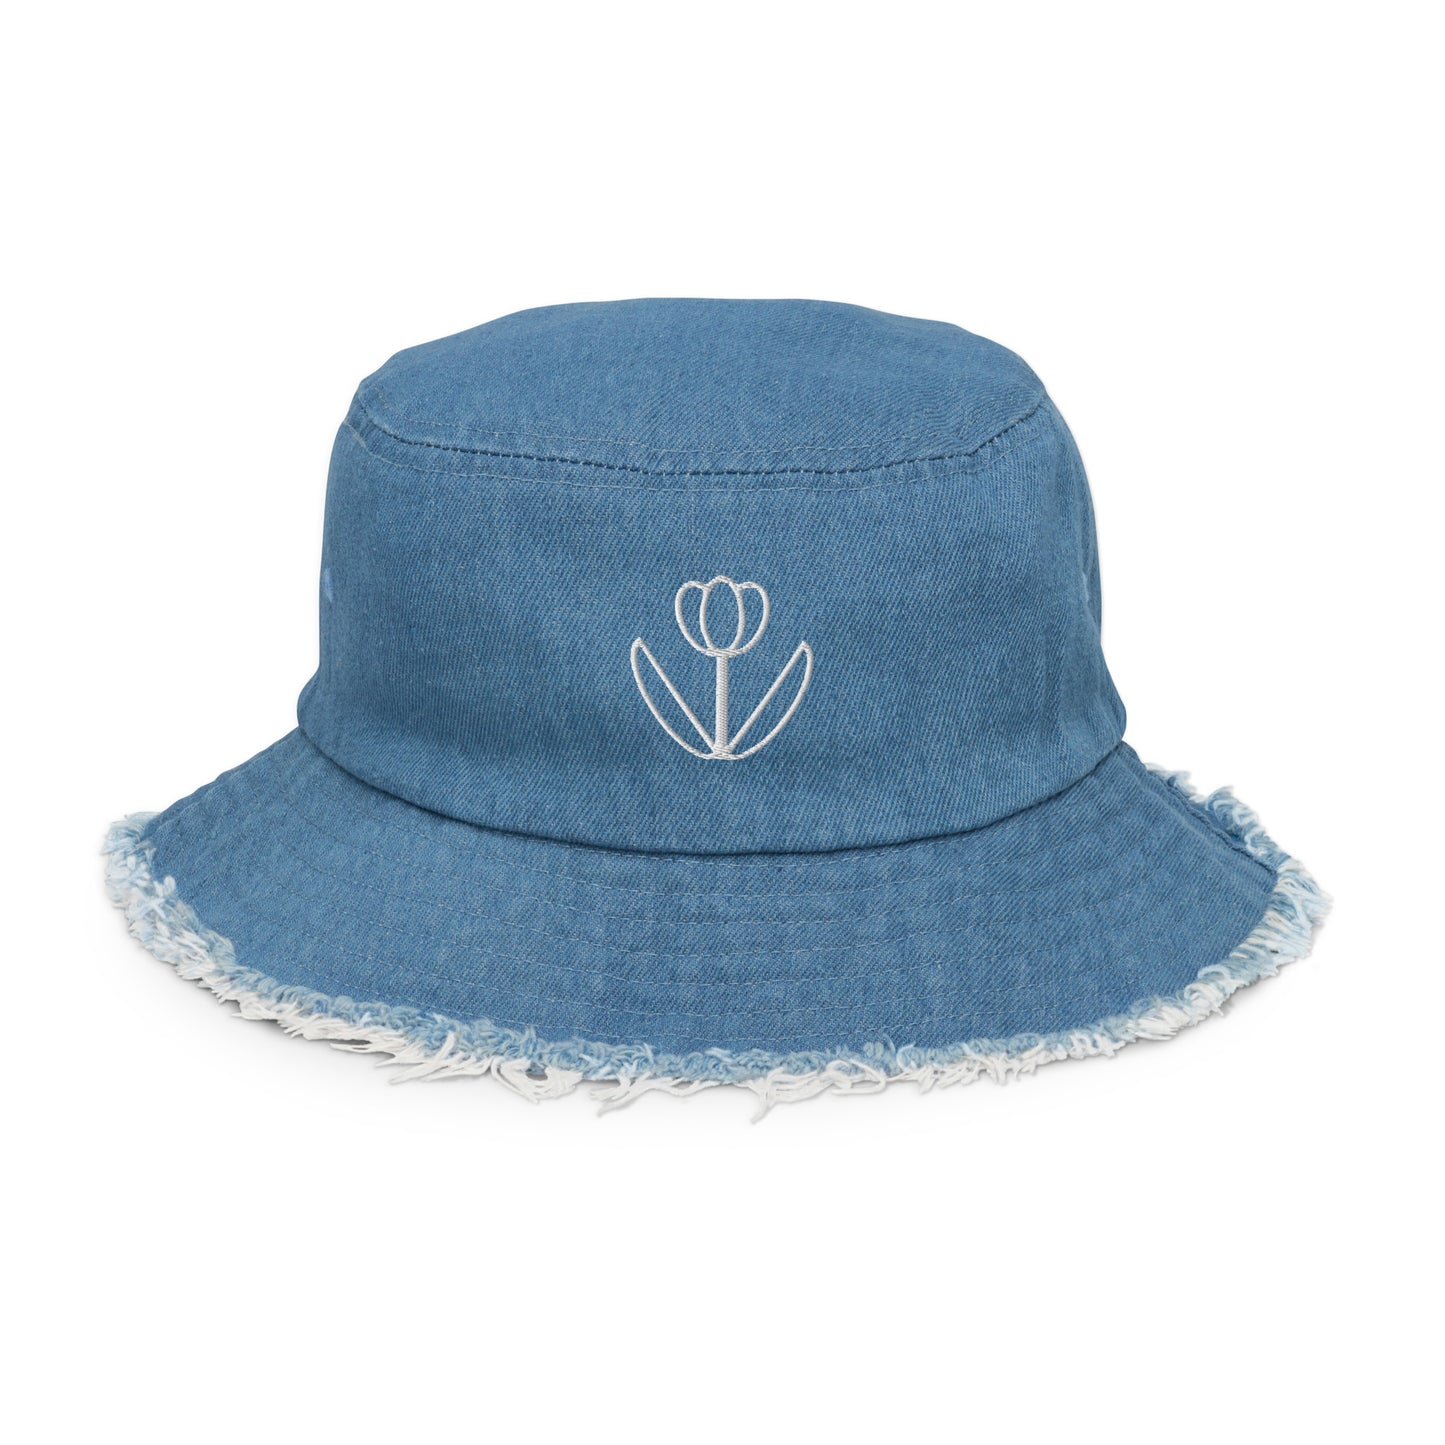 Maria’s Tulips-Distressed Denim Bucket Hat